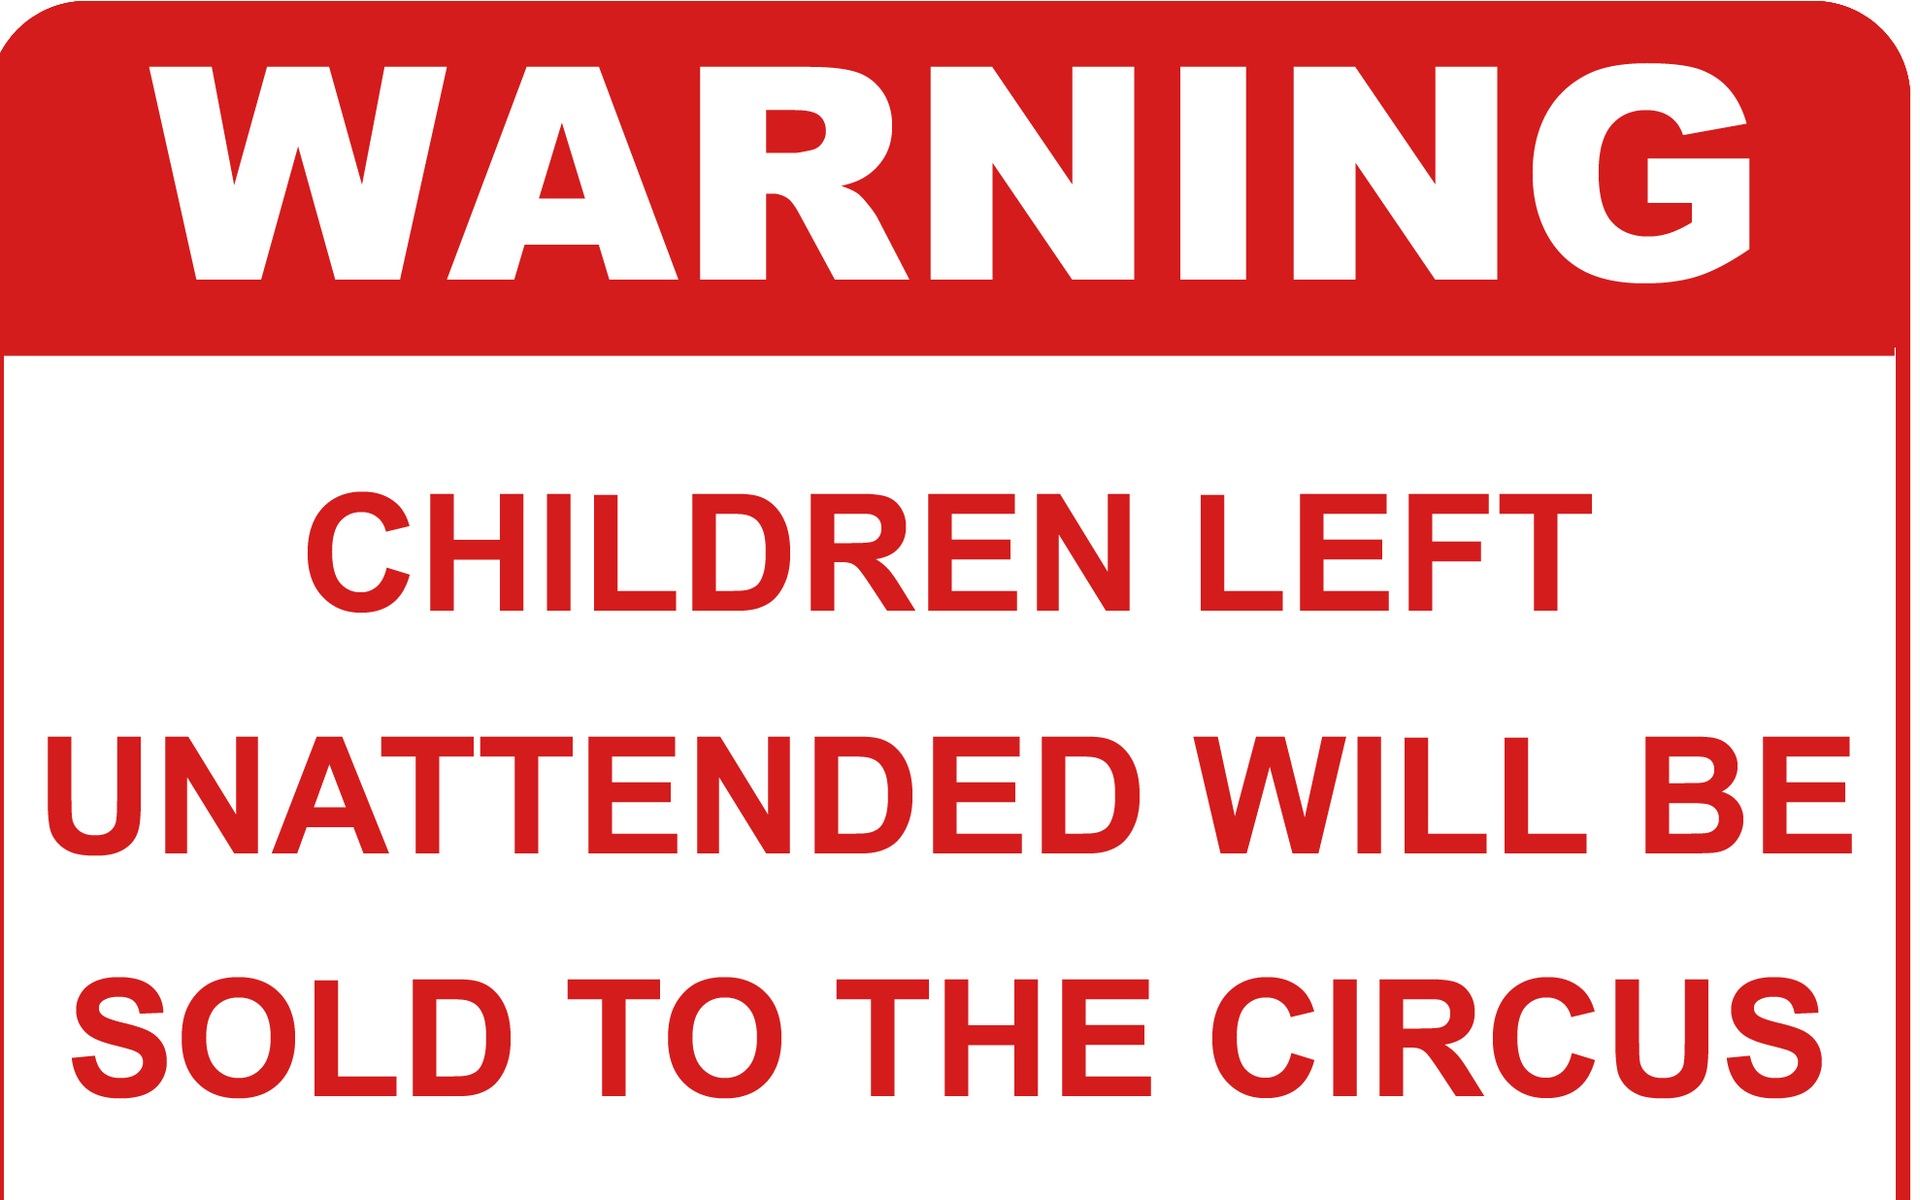 Funny Warning Signs Wallpaper Signs warning wallpaper